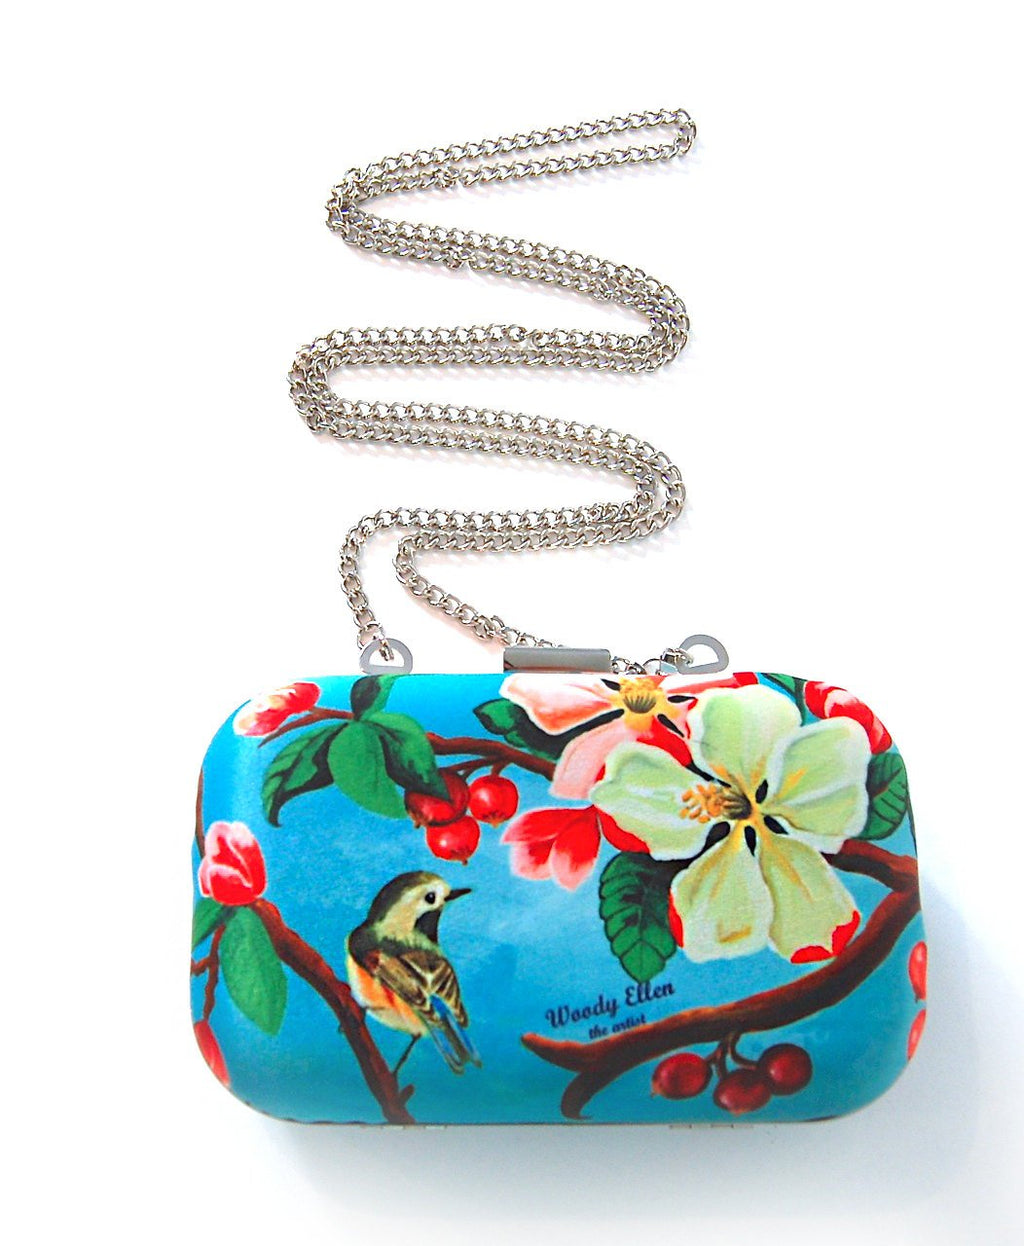 Woody Ellen Blossom Clutch Box Bag